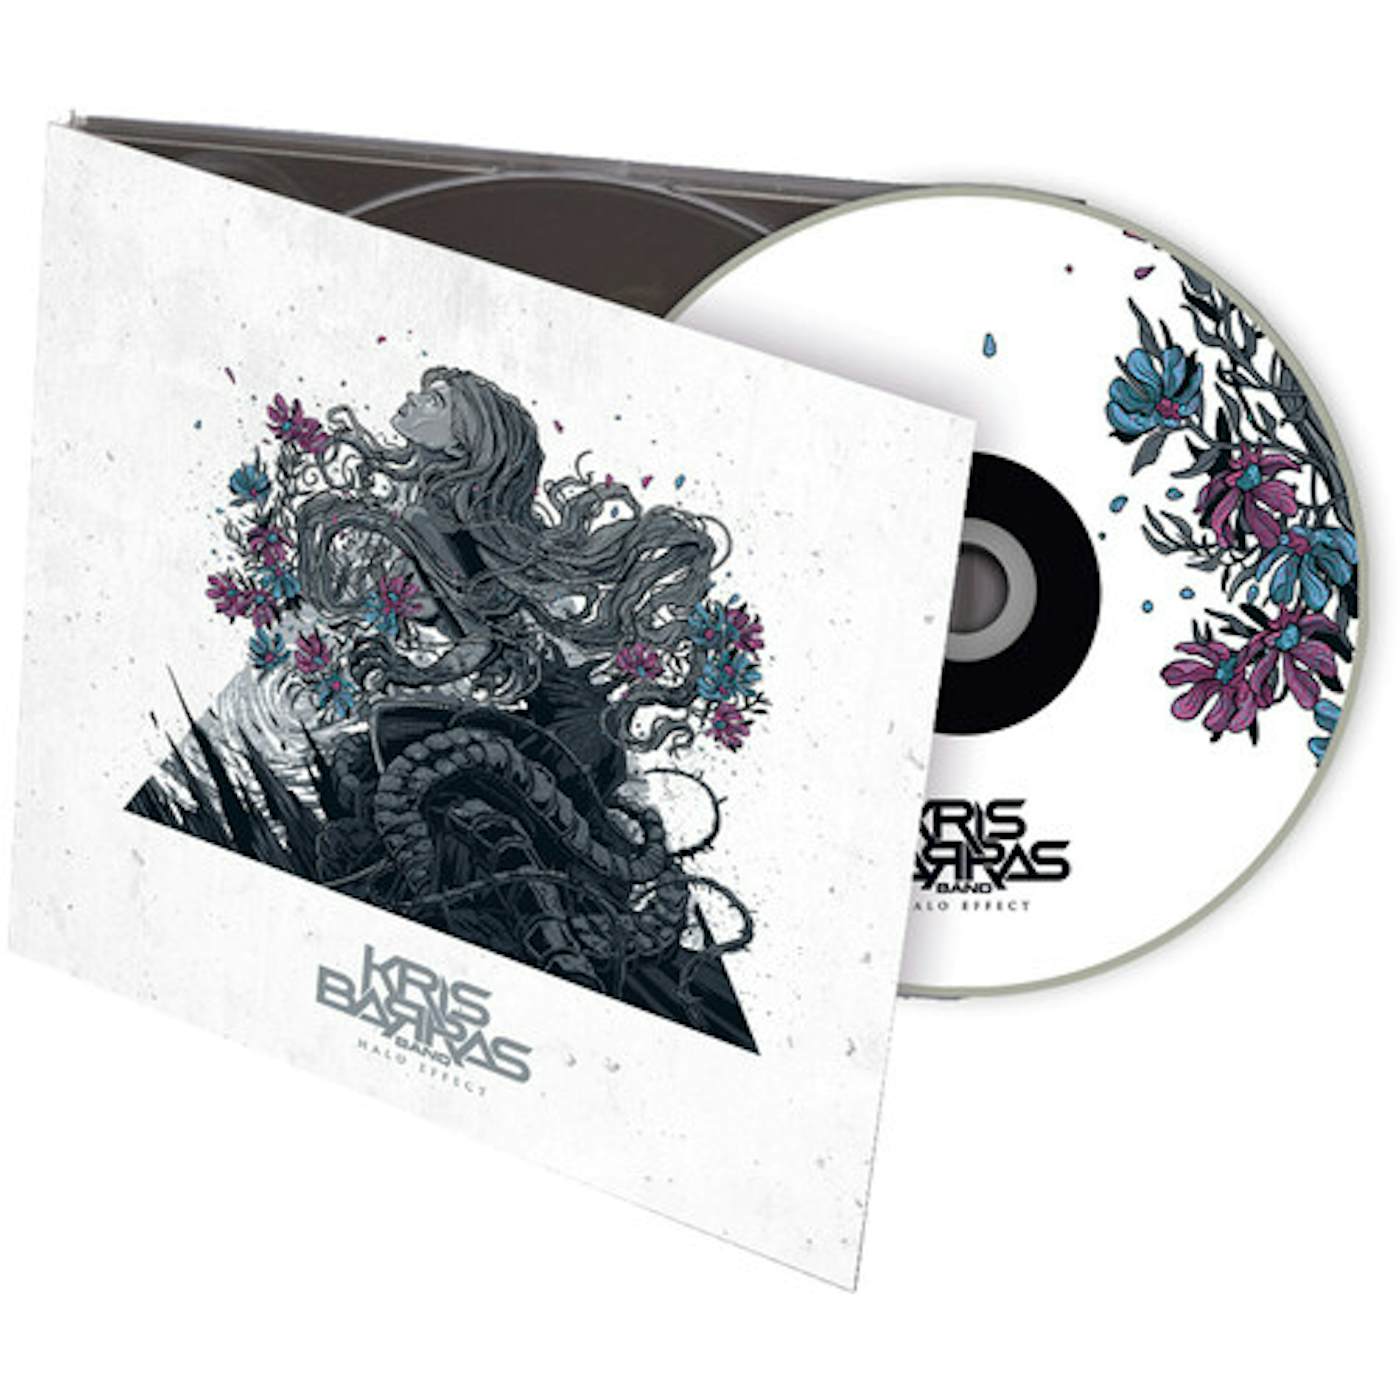 Kris Barras Band HALO EFFECT CD